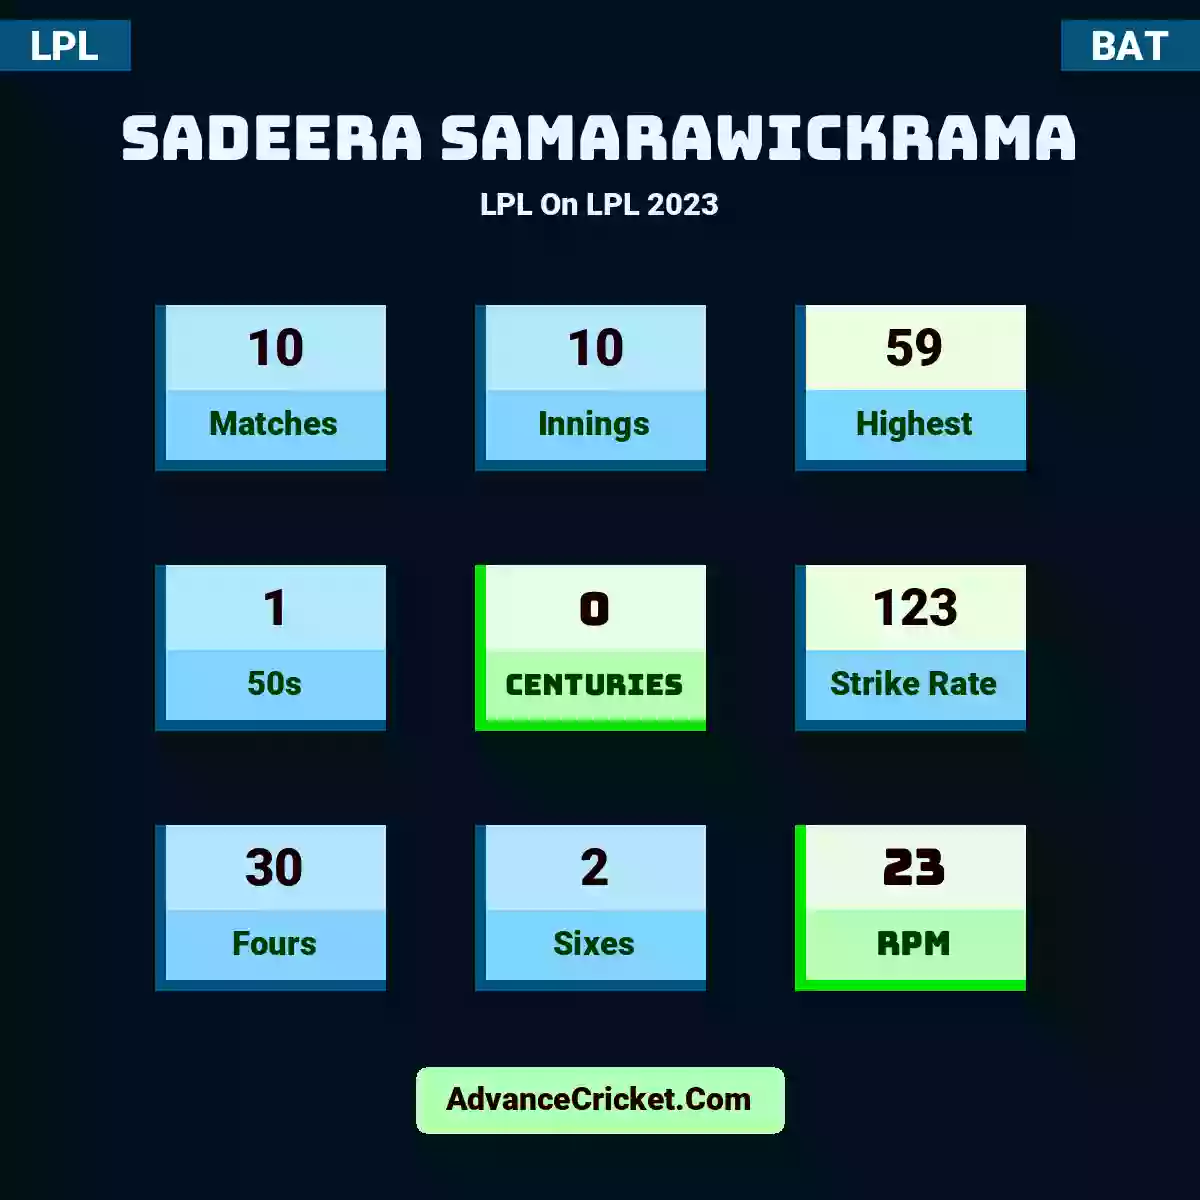 Sadeera Samarawickrama LPL  On LPL 2023, Sadeera Samarawickrama played 10 matches, scored 59 runs as highest, 1 half-centuries, and 0 centuries, with a strike rate of 123. S.Samarawickrama hit 30 fours and 2 sixes, with an RPM of 23.